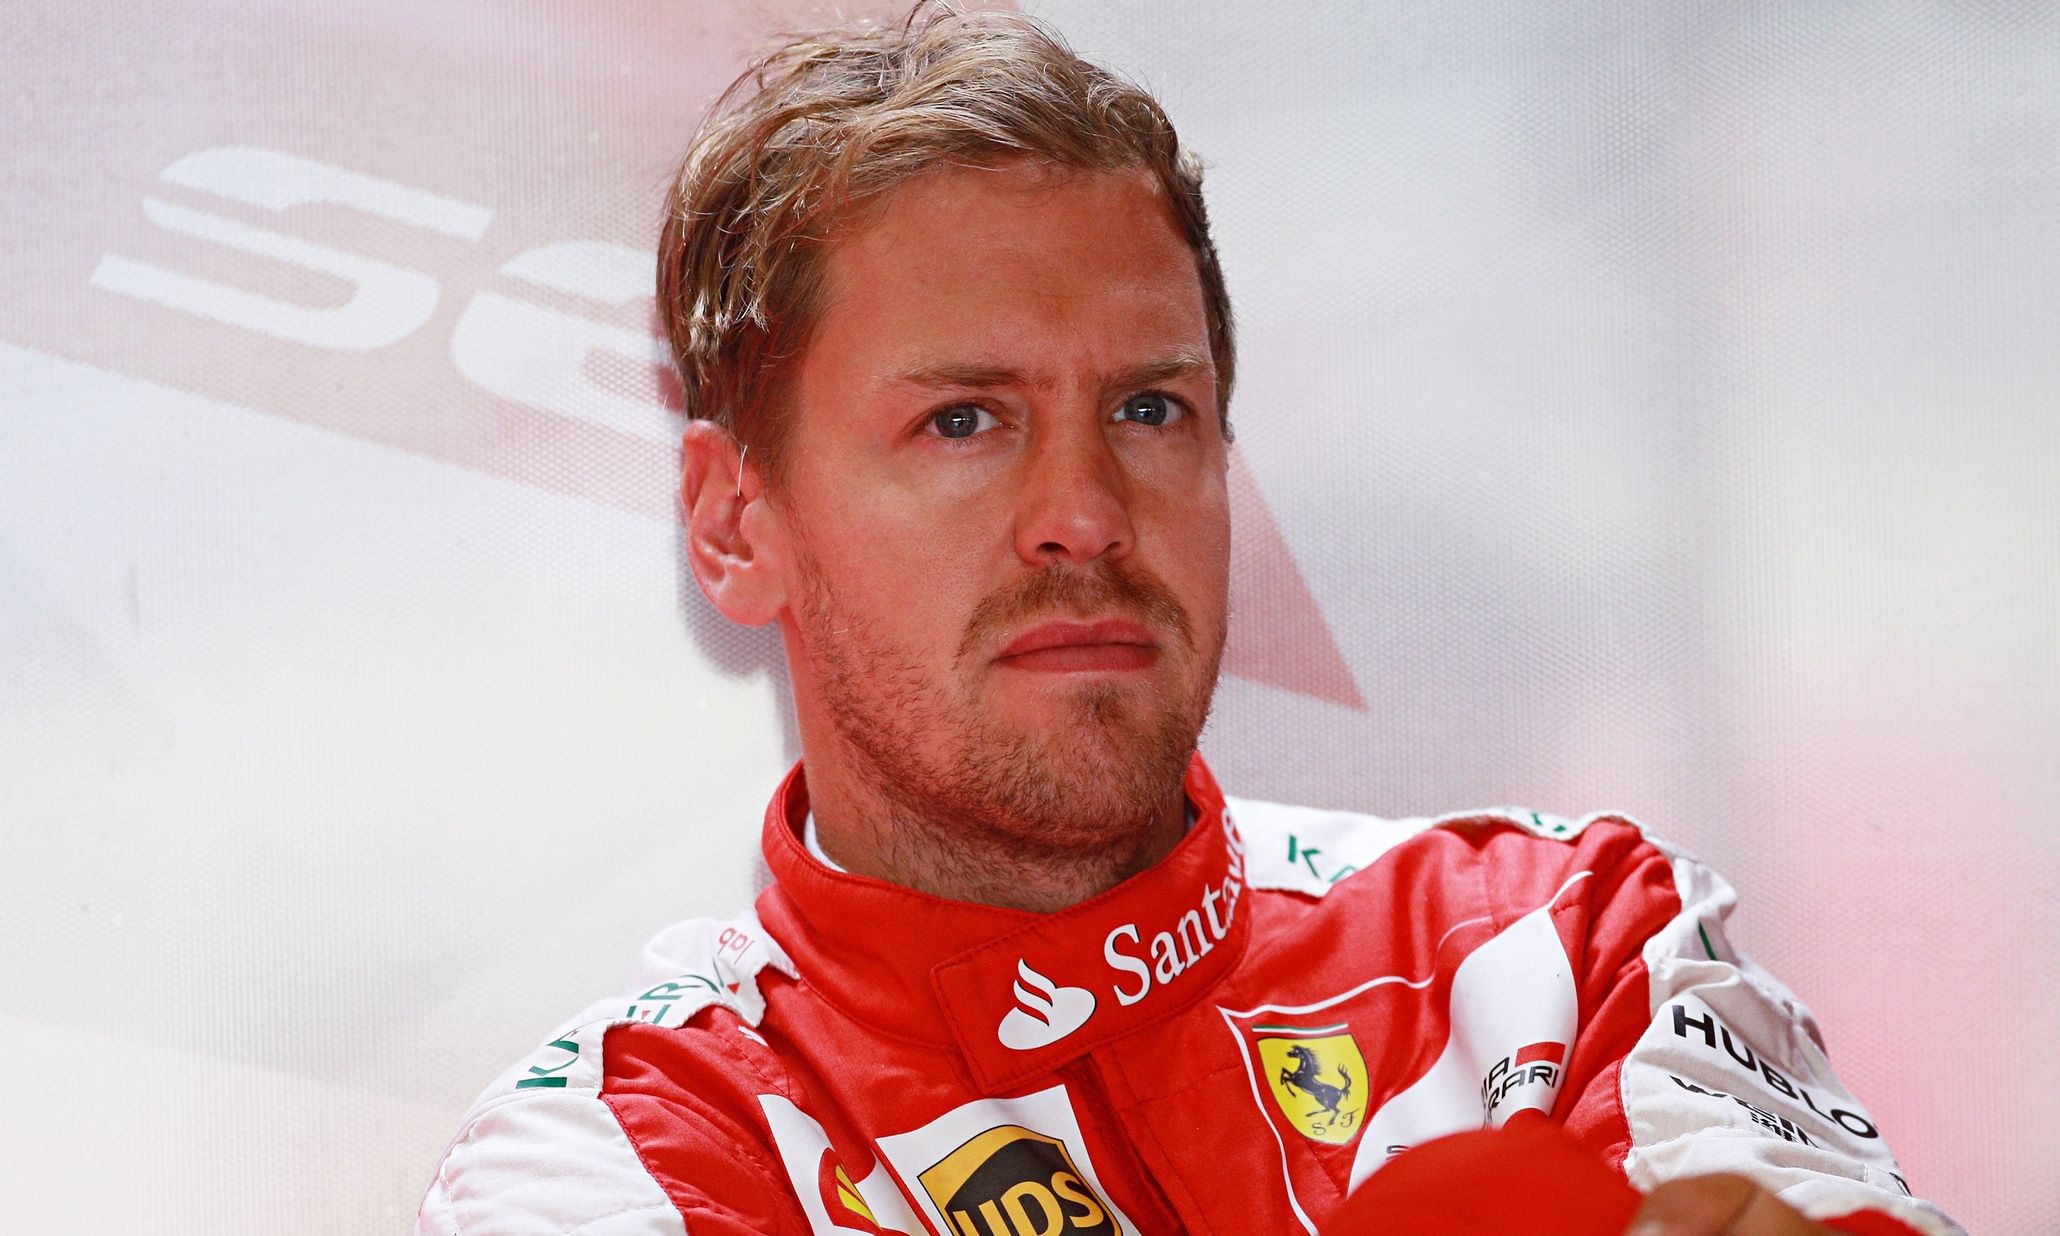 Sebastian-Vettel-Hungarian-Grand-Prix